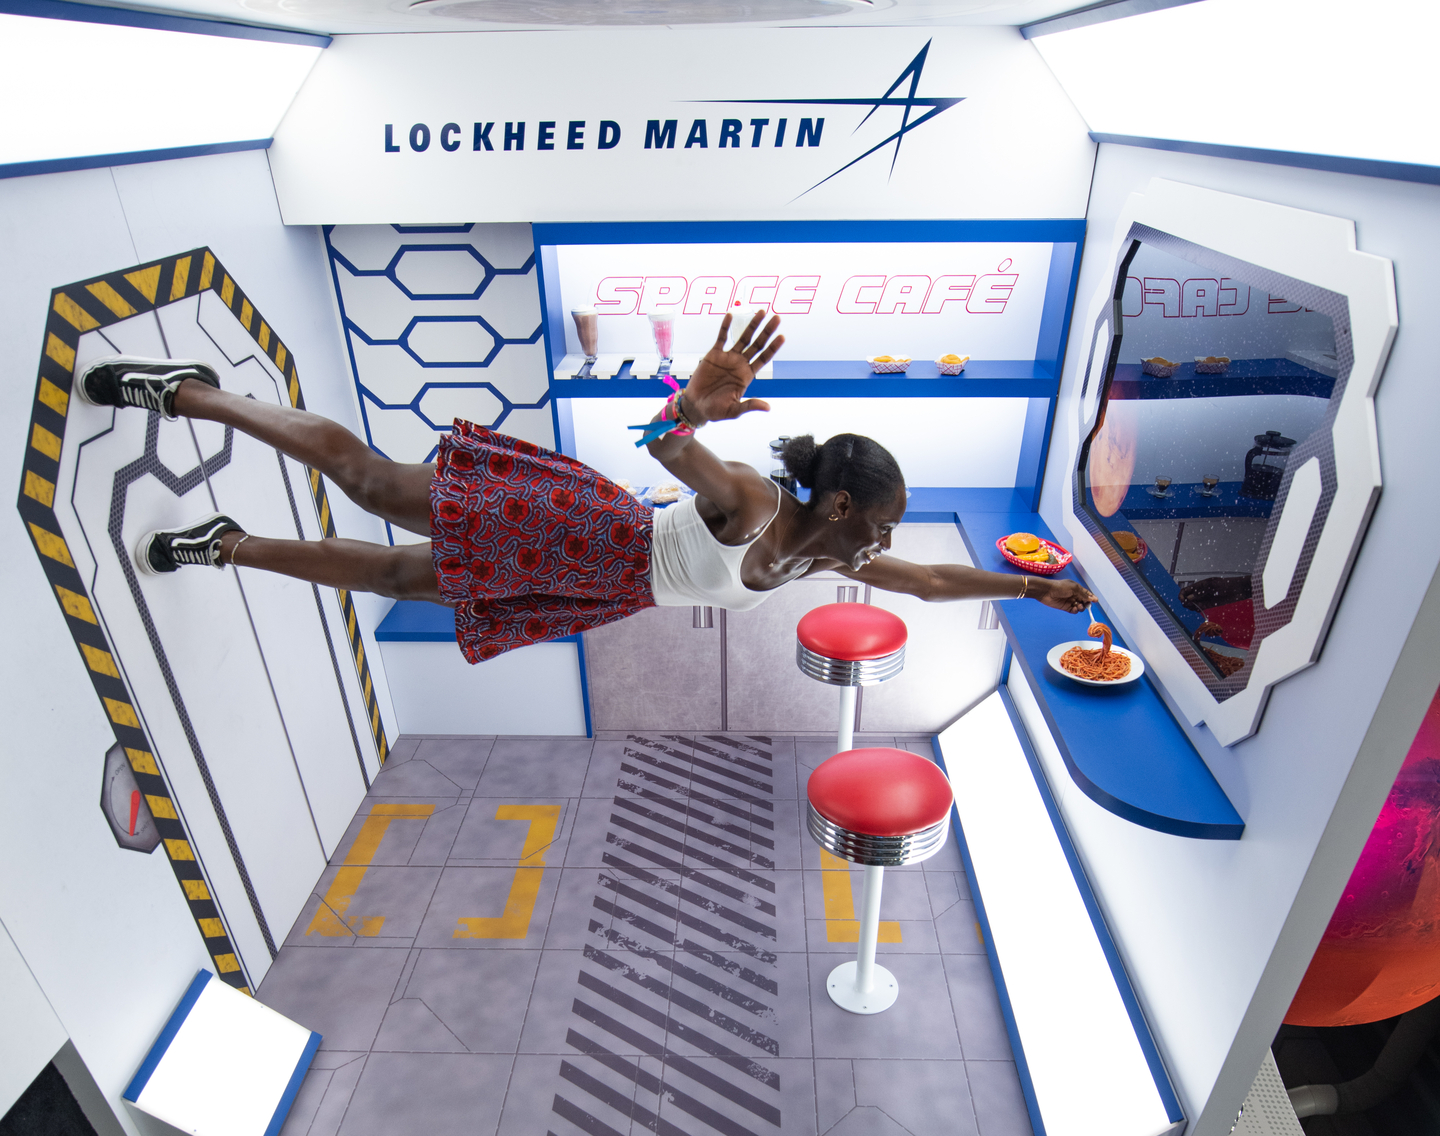 Lockheed Martin's Space Café at the Trade Show - Photo by Tico Mendoza